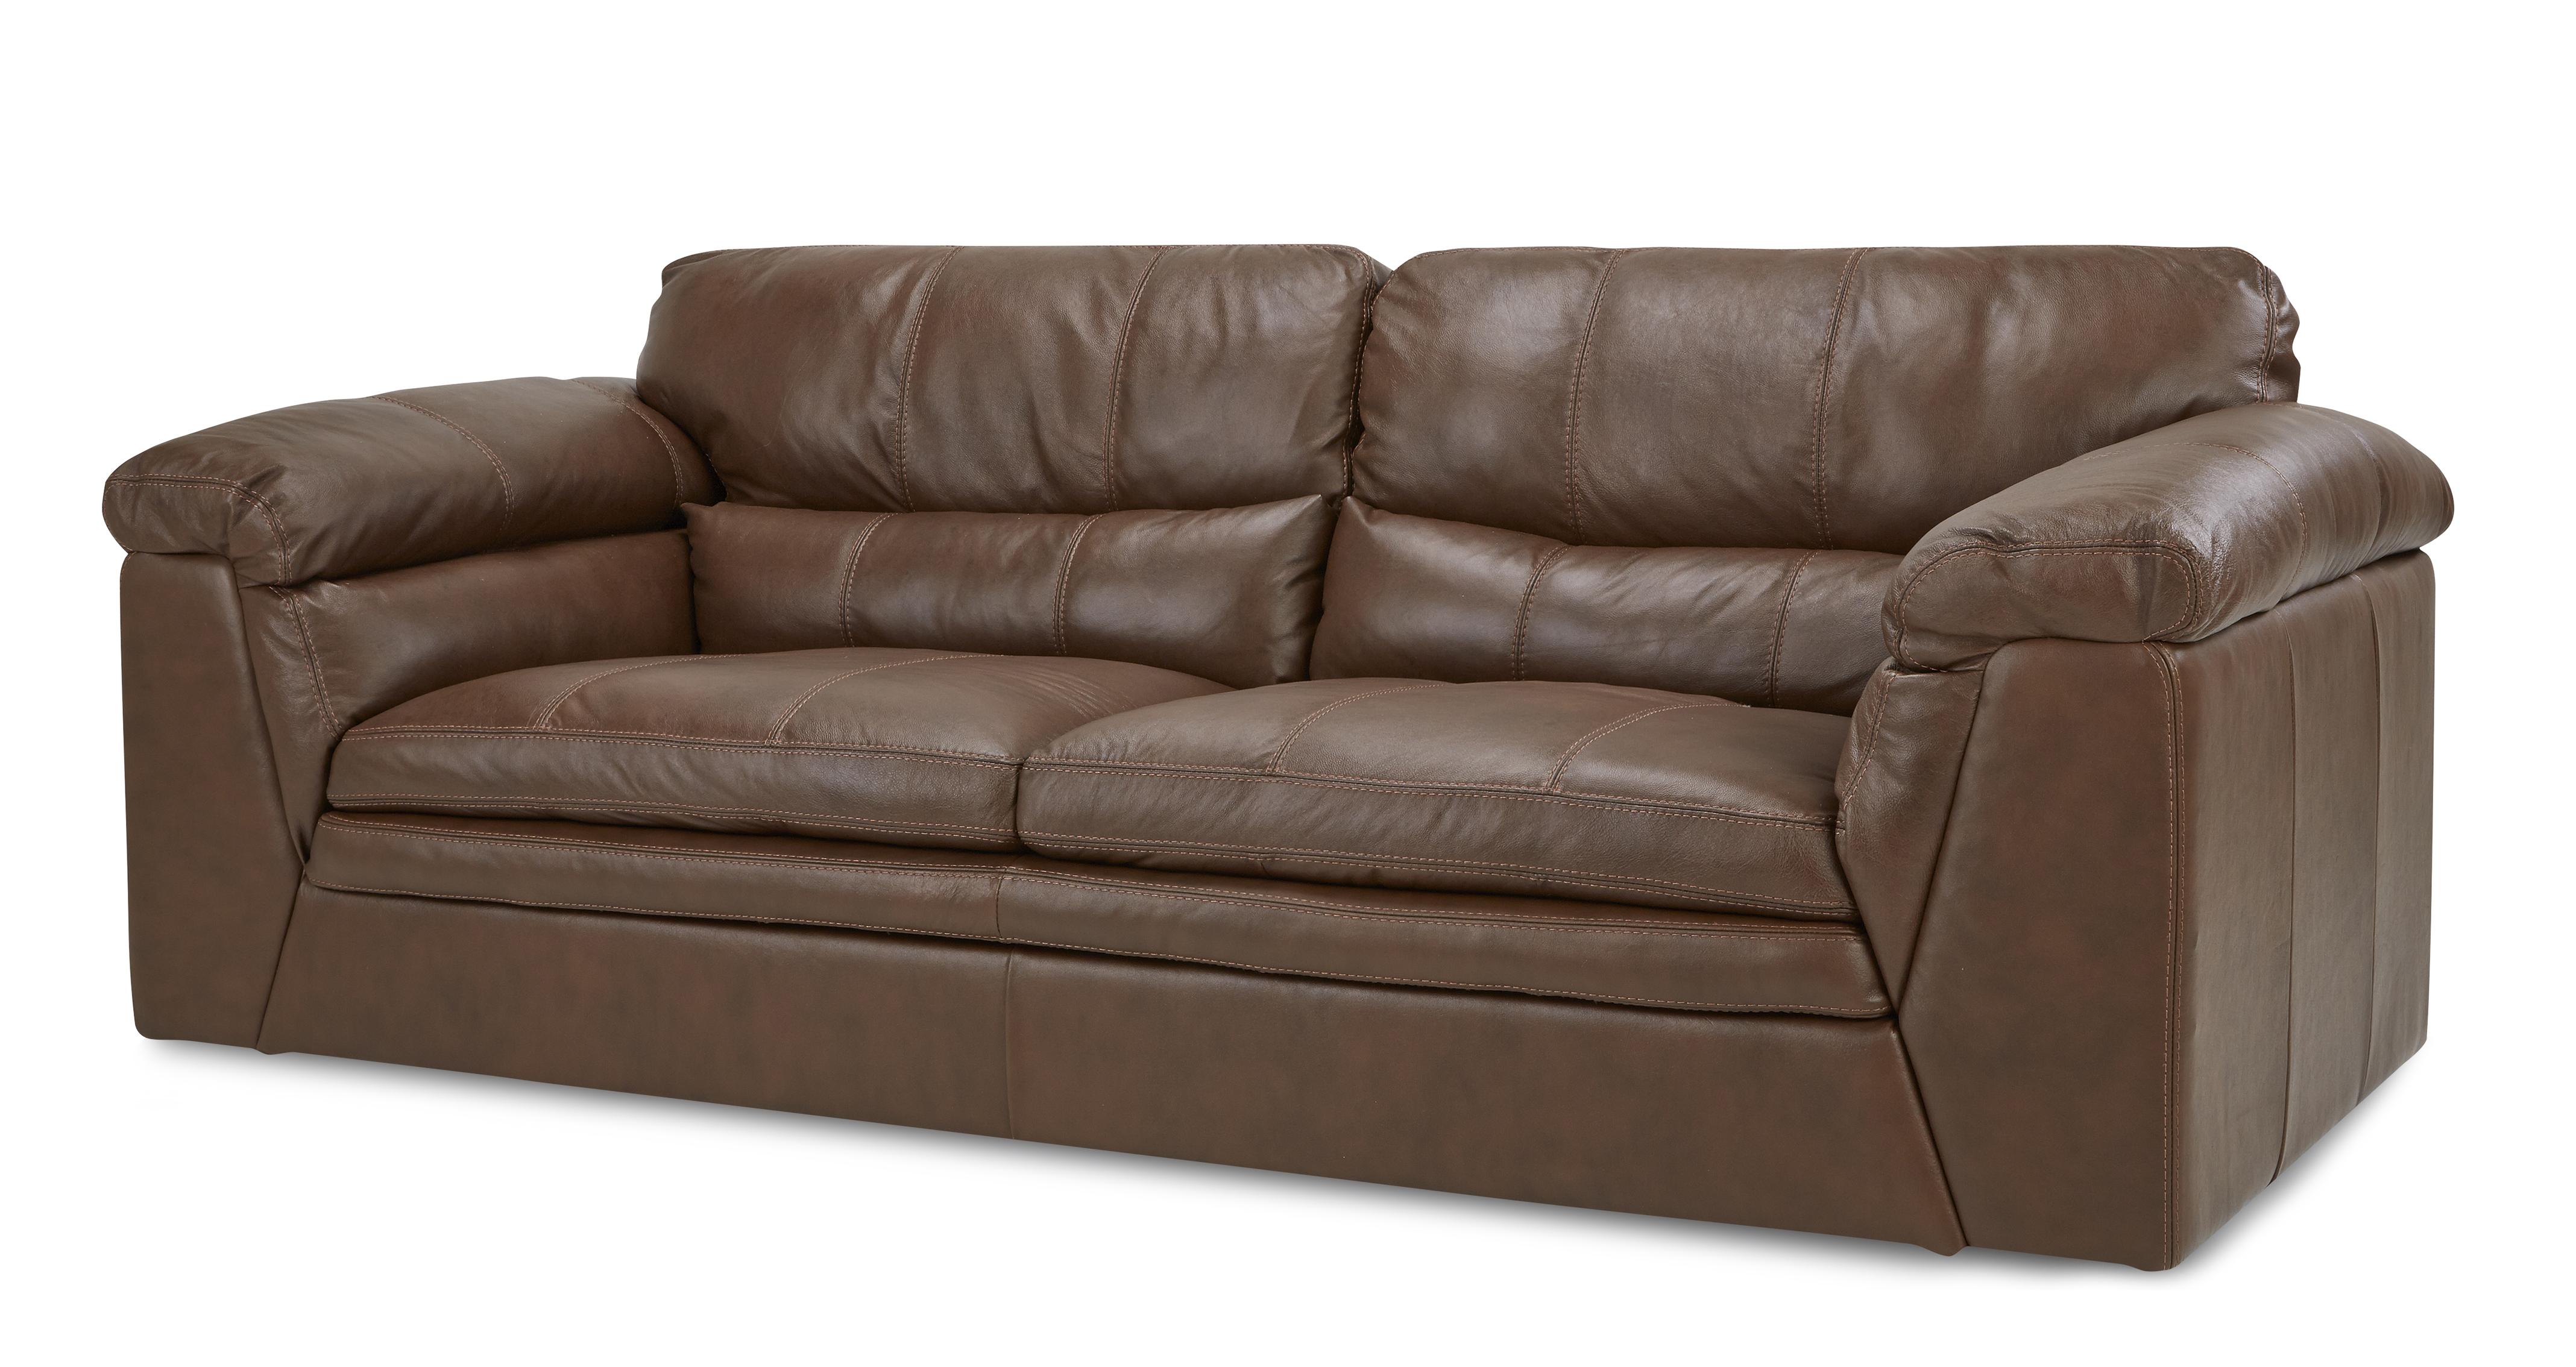 dfs leon 3 seater leather sofa